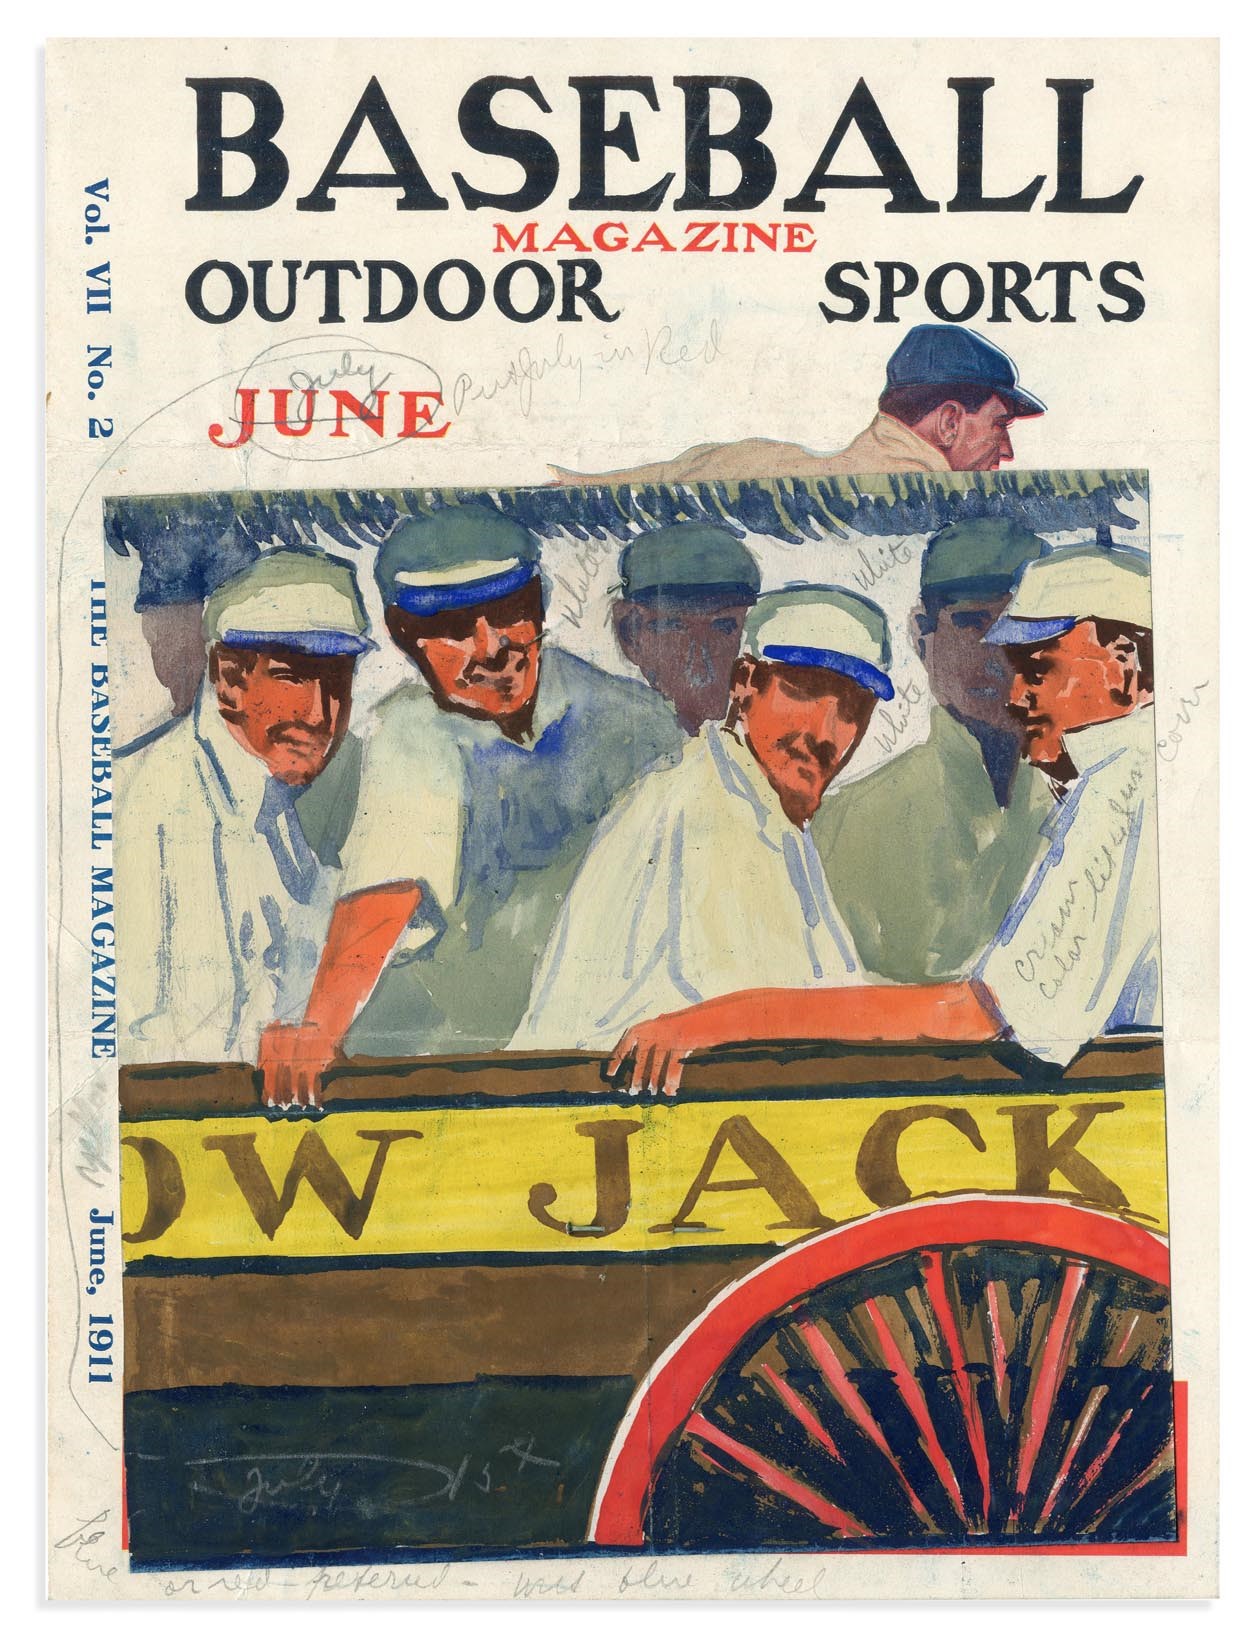 The Baseball Magazine Original Art - August 1911 Baseball Magazine Cover Art Study Mounted on Rare Proof Cover by Gerrit Beneker (1882-1934)